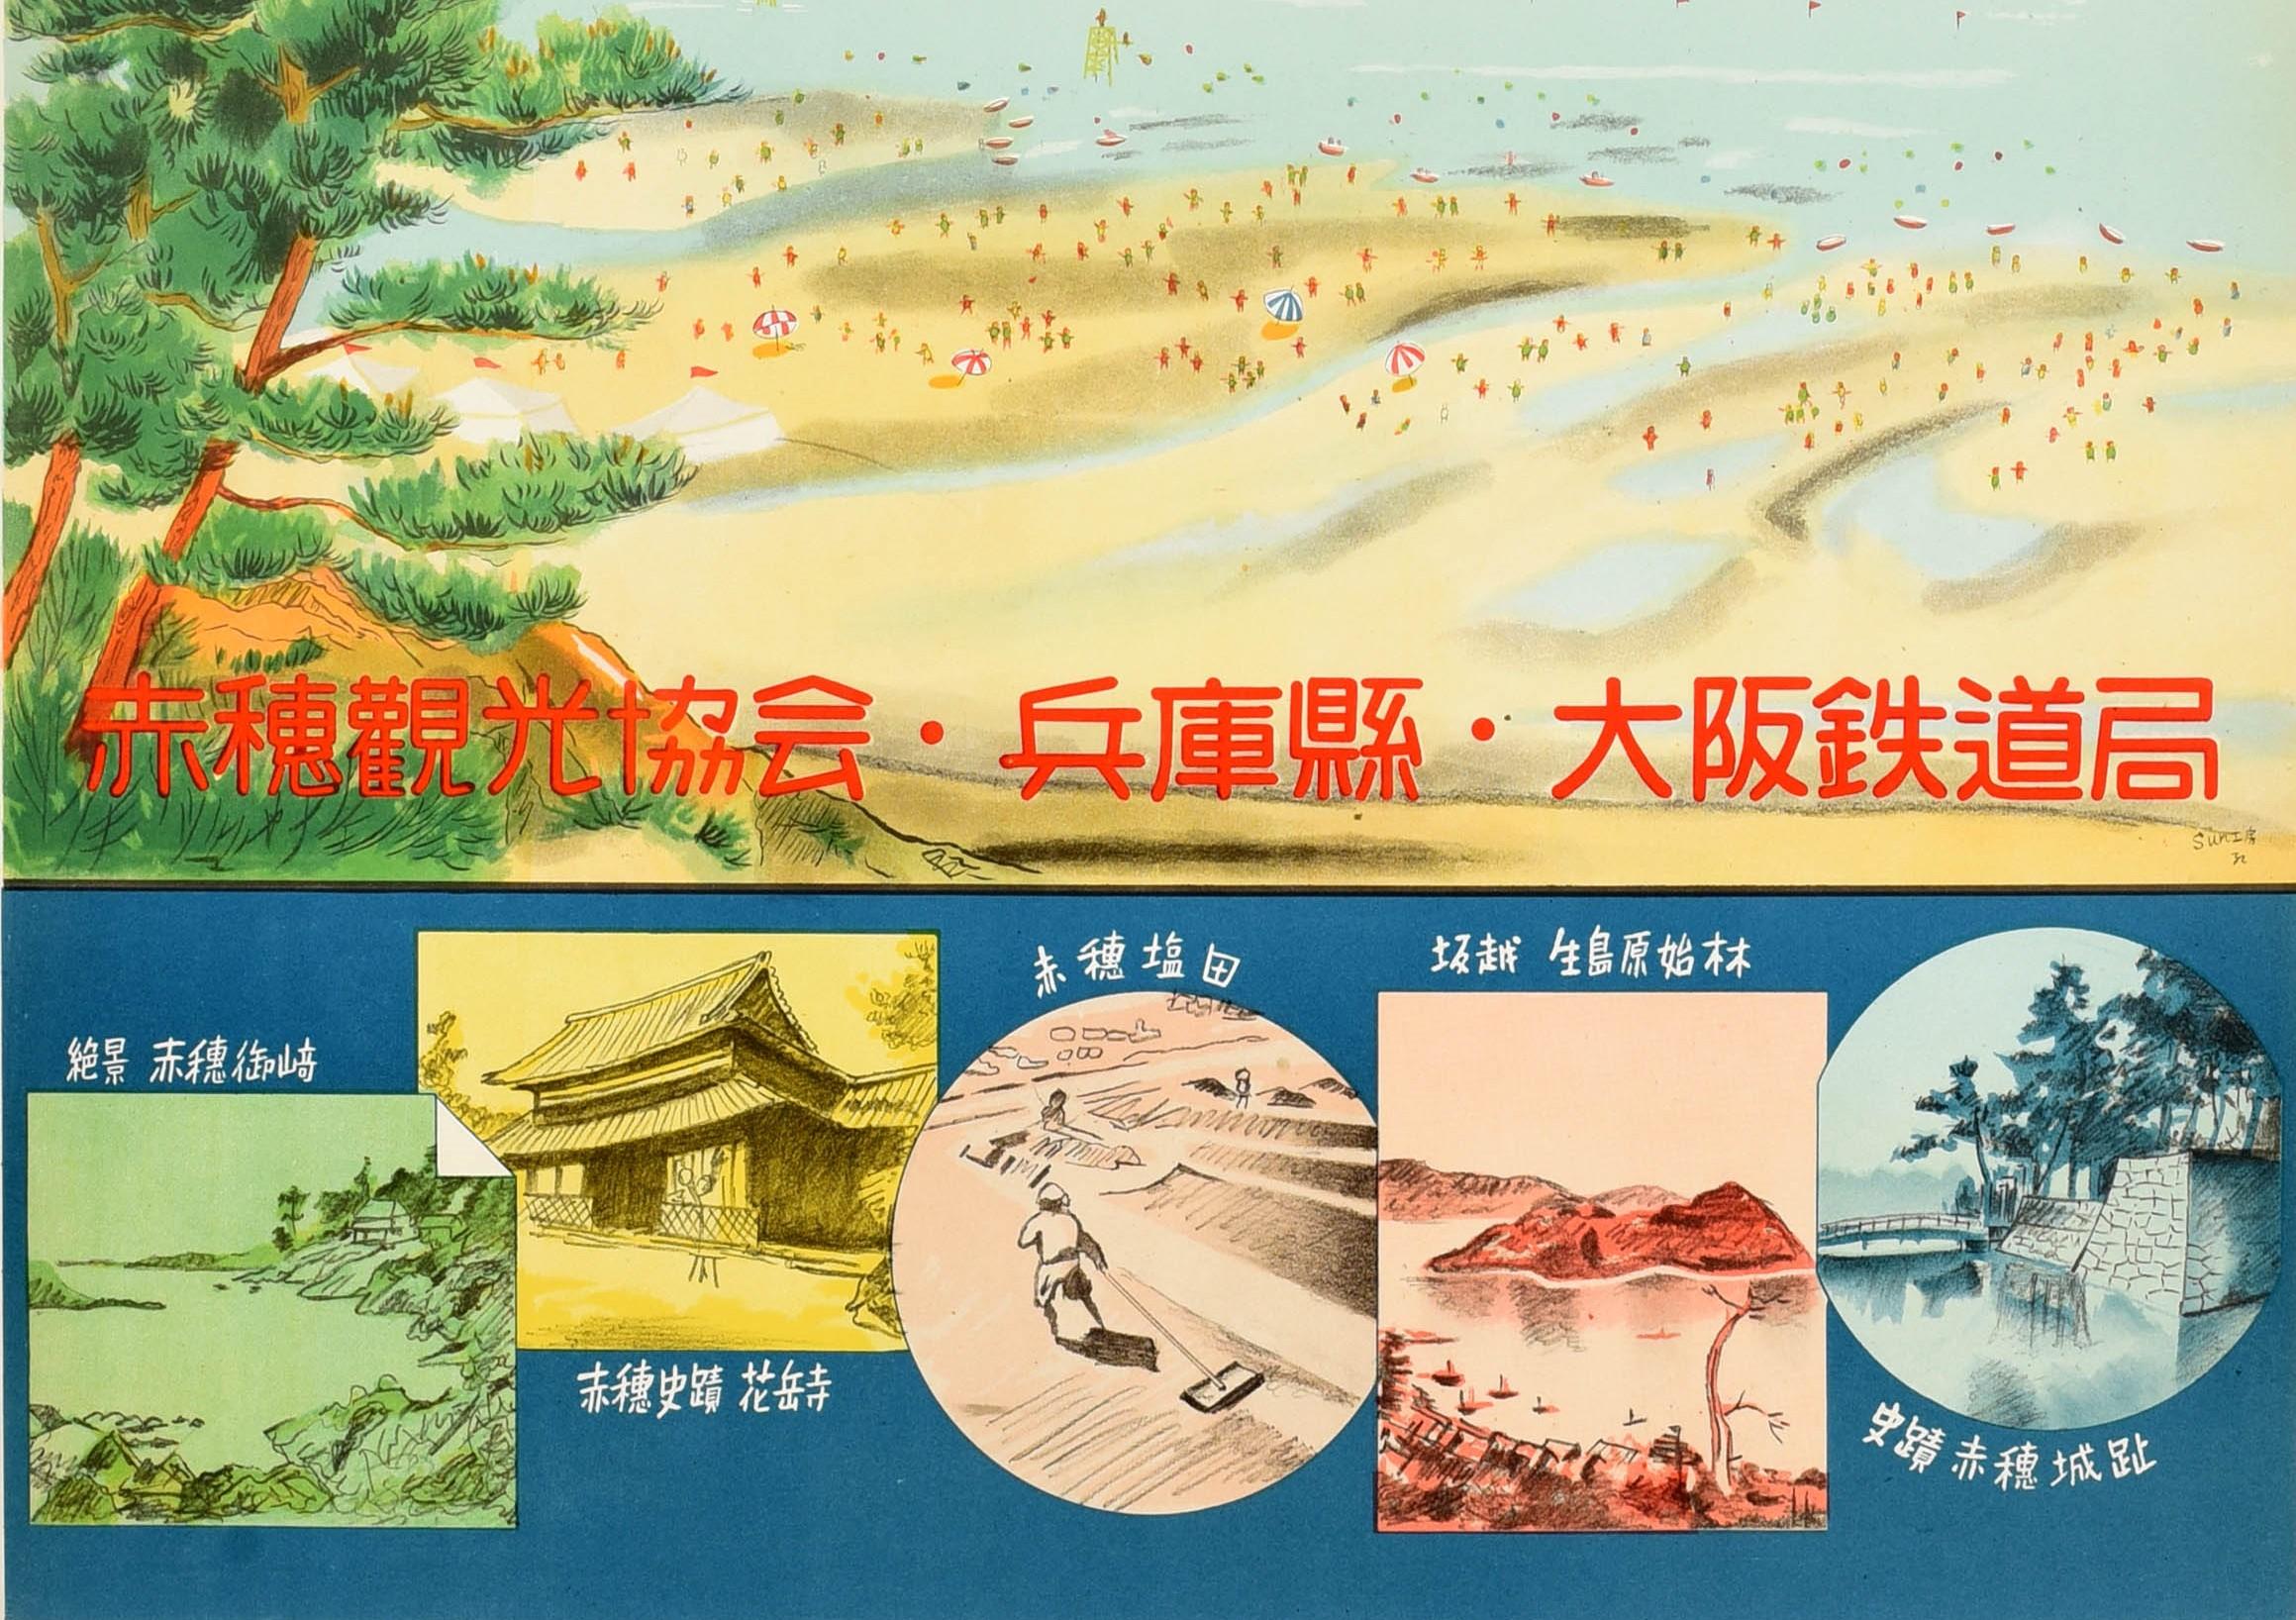 Japanese Original Vintage Travel Poster Fukuura Beach Japan Scenic Coast View Island Art For Sale